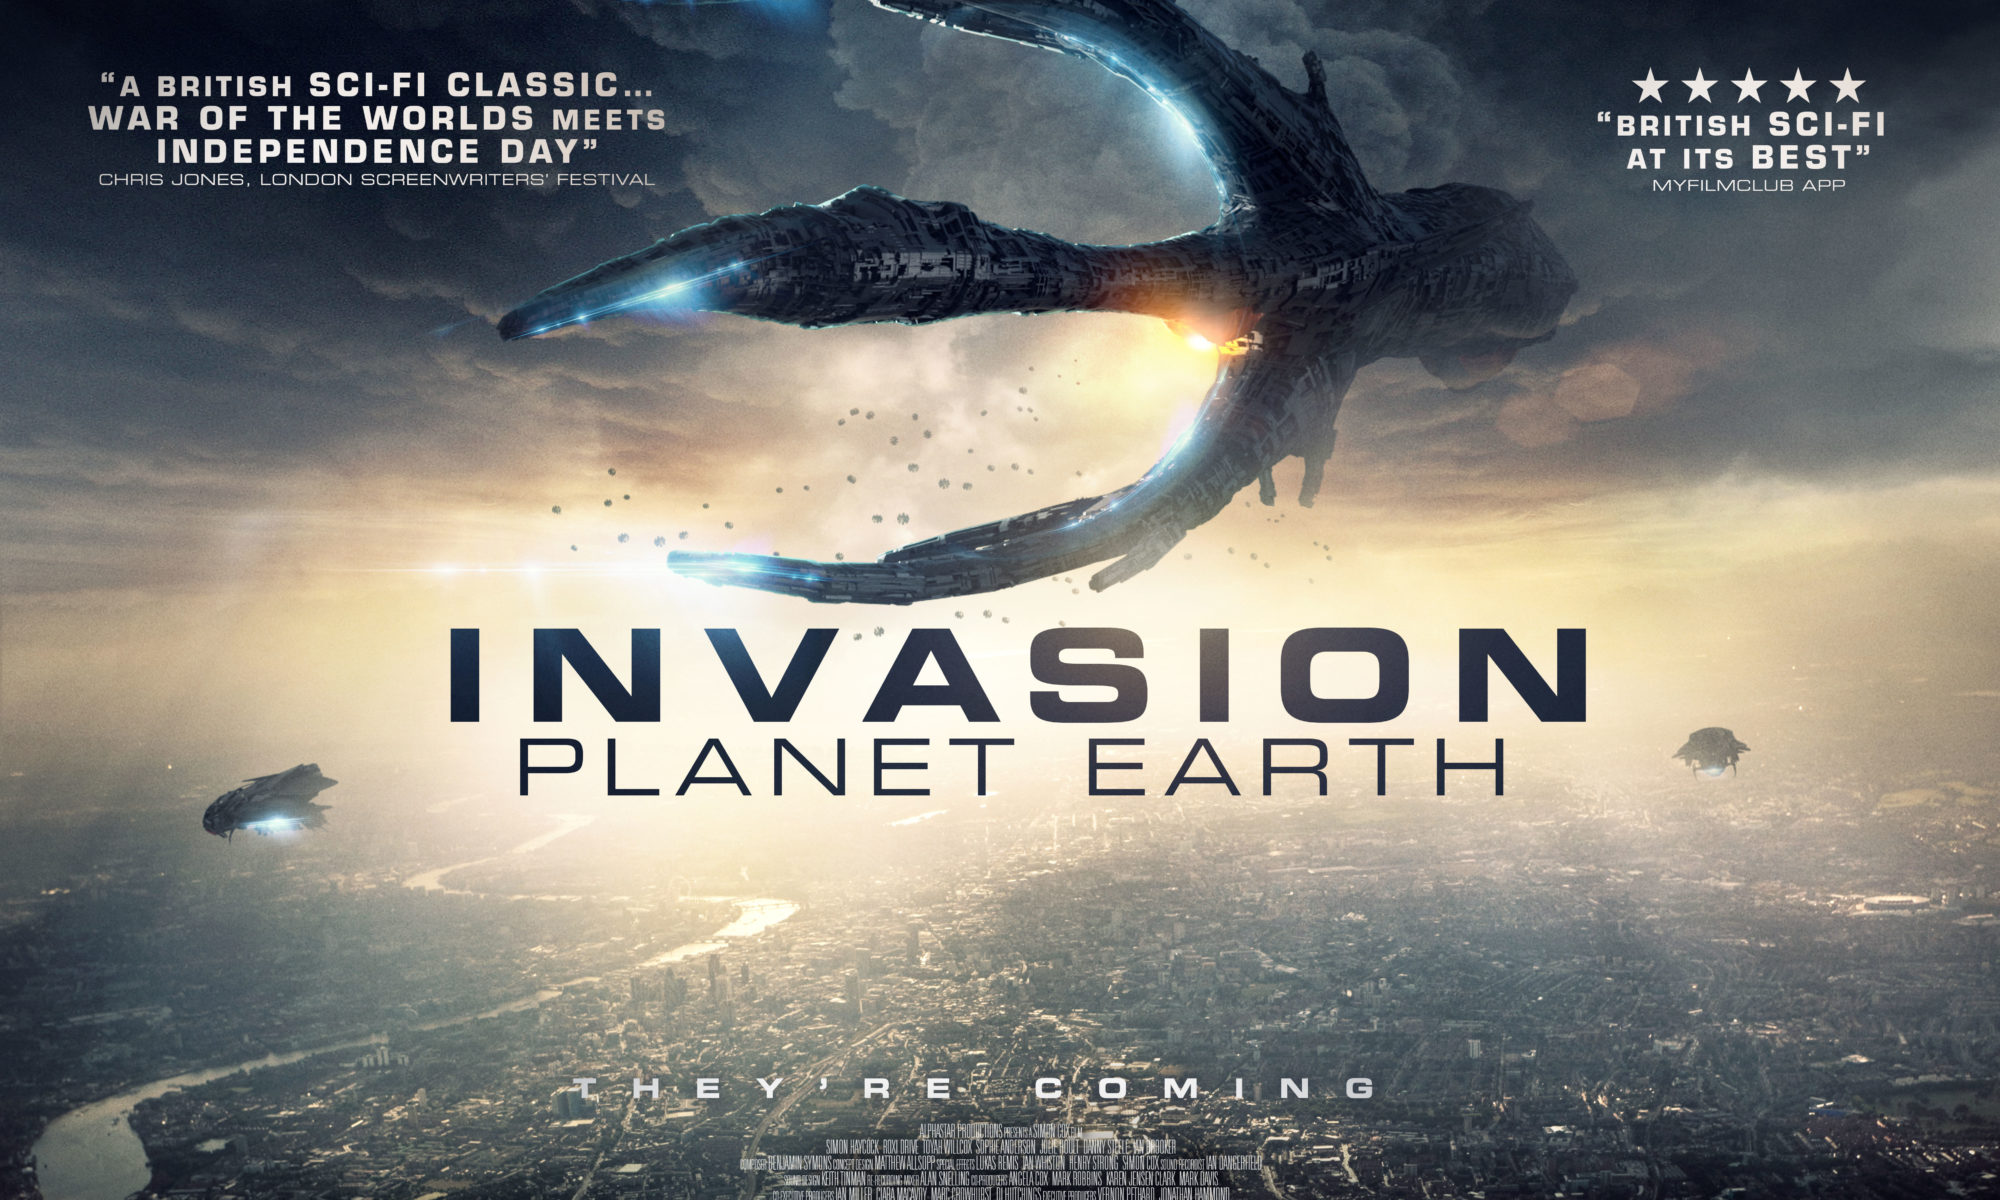 Invasion Planet Earth Trailer